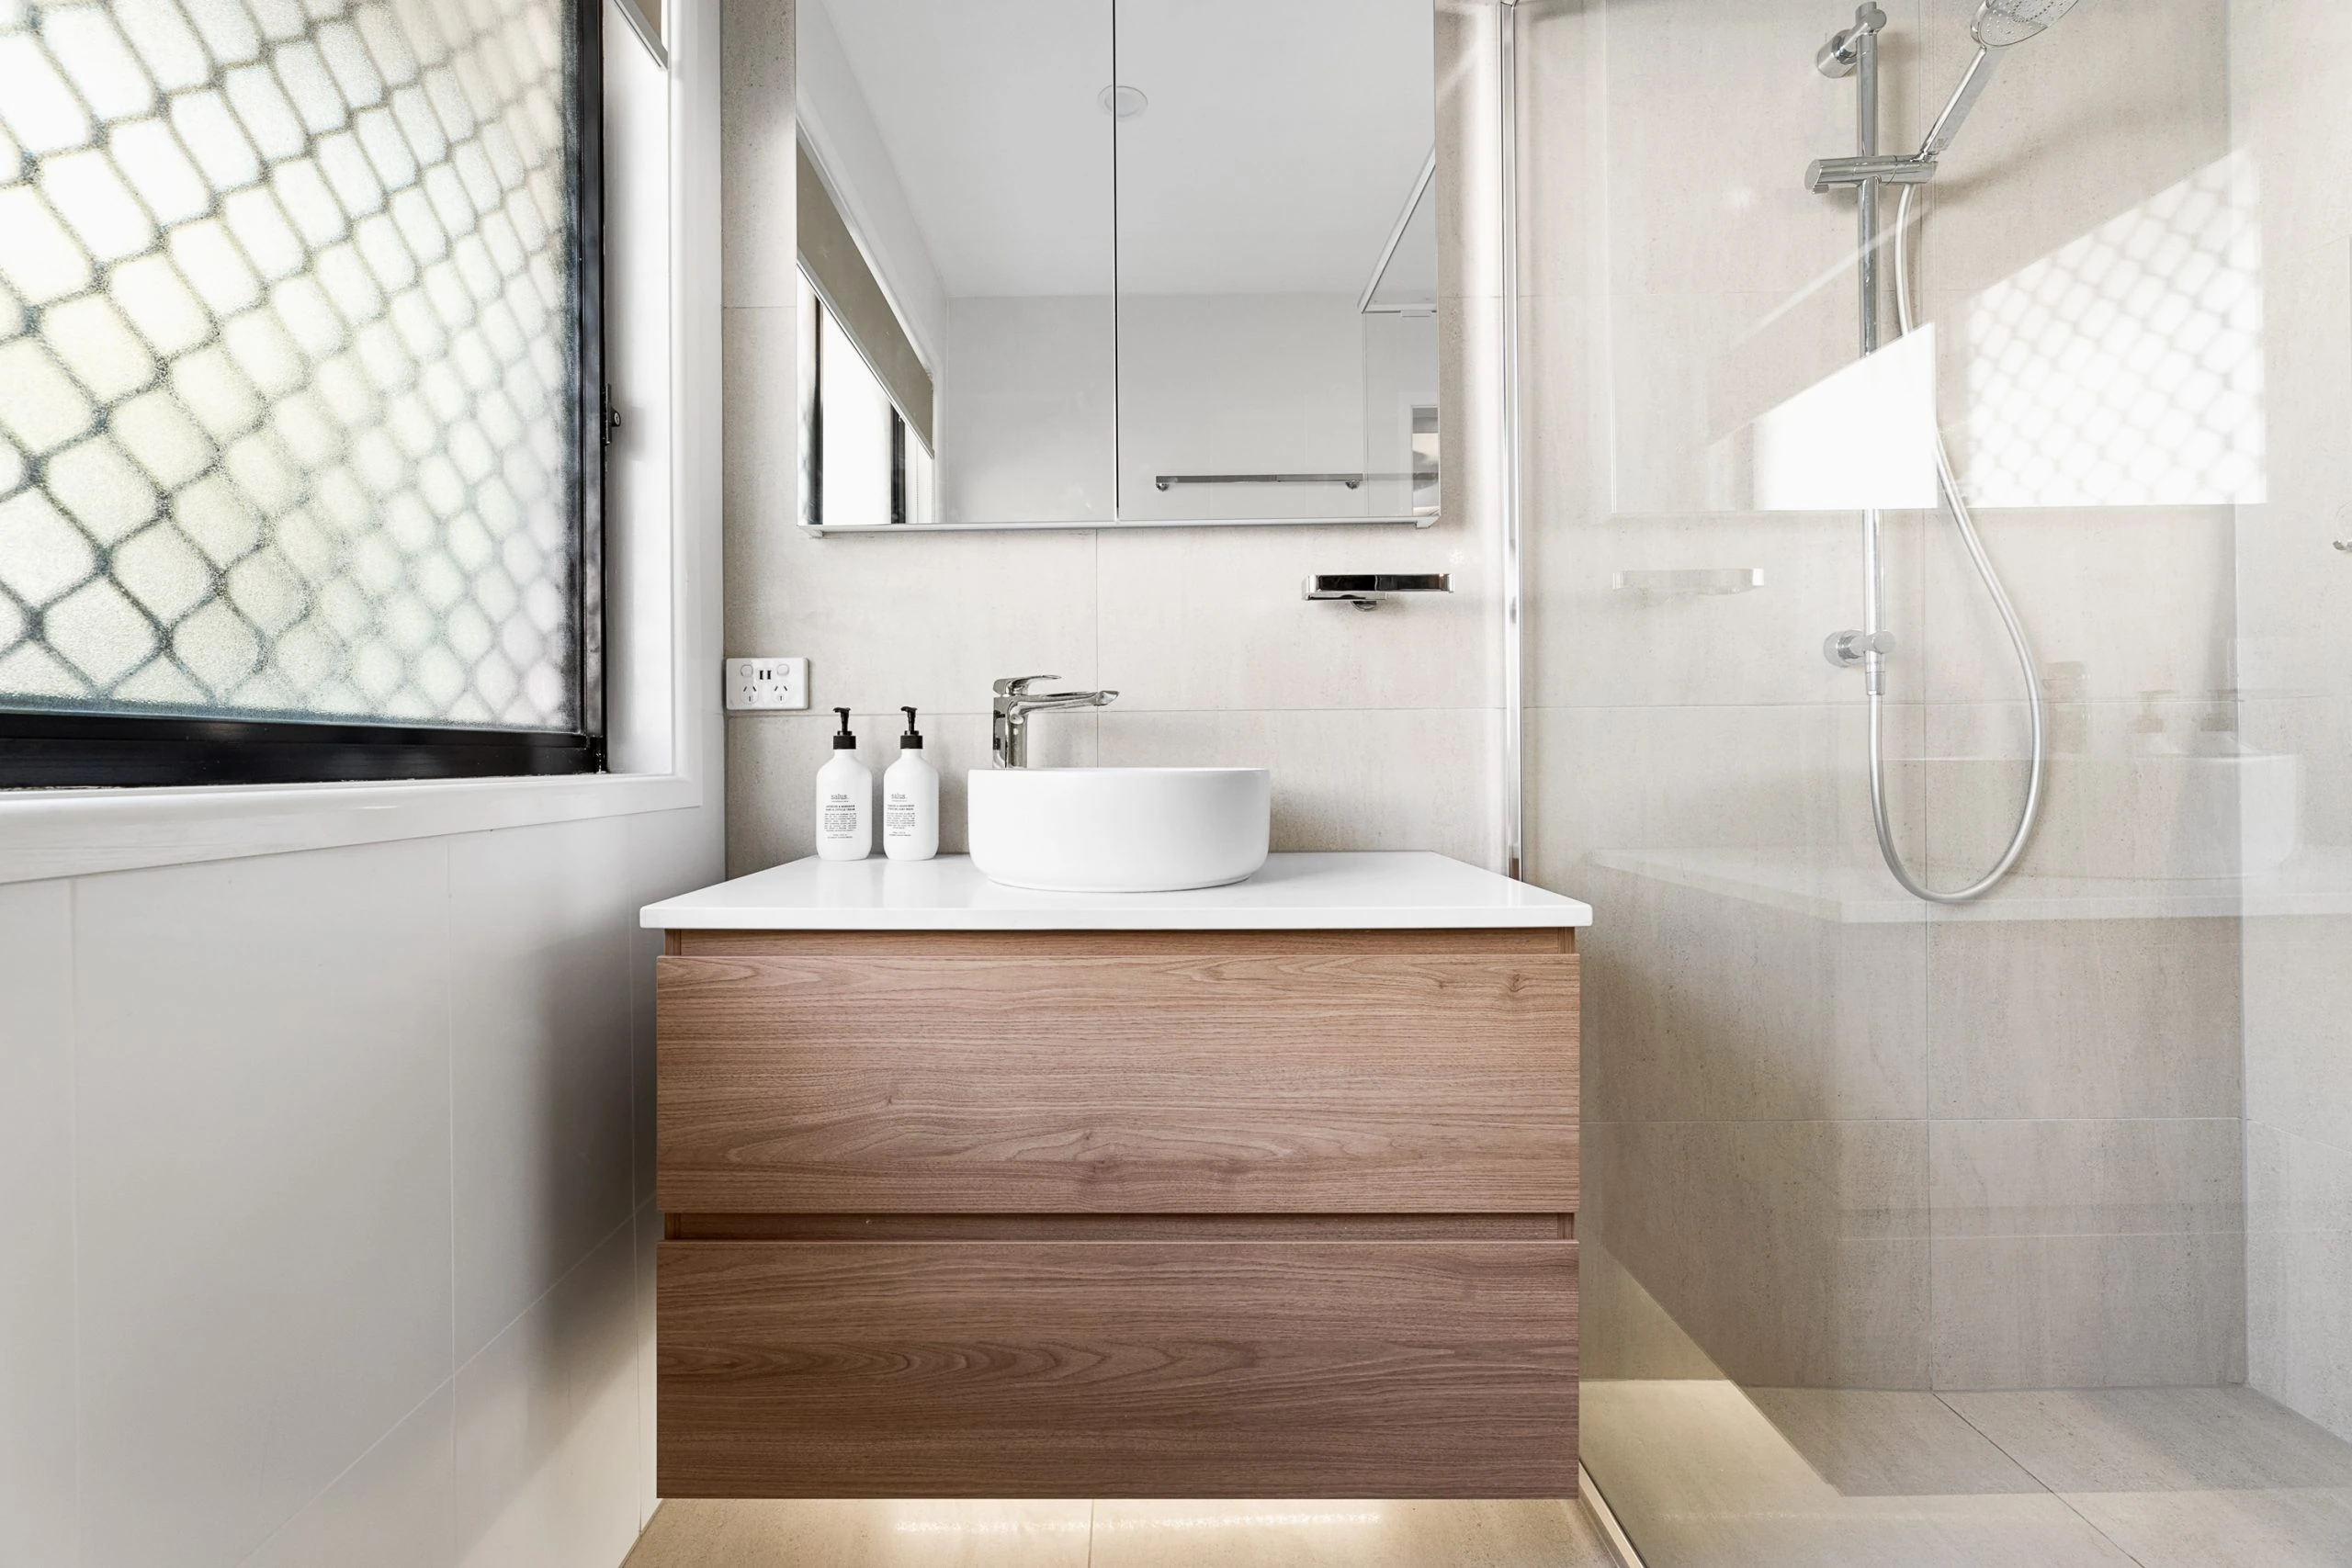 Wooden vanity unit in a light modern bathroom